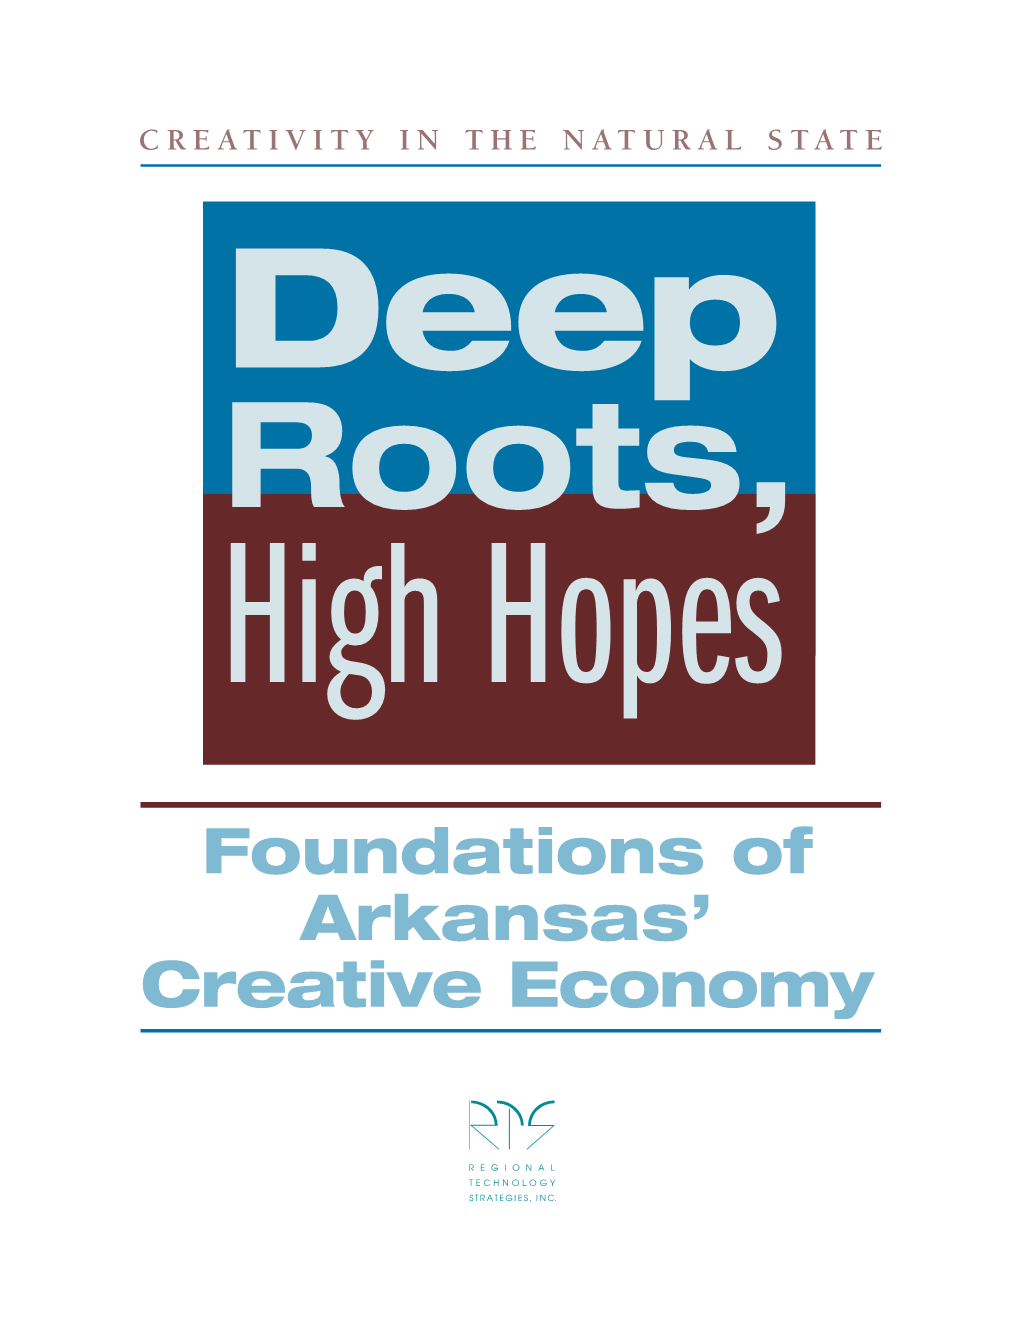 Foundations of Arkansas' Creative Economy